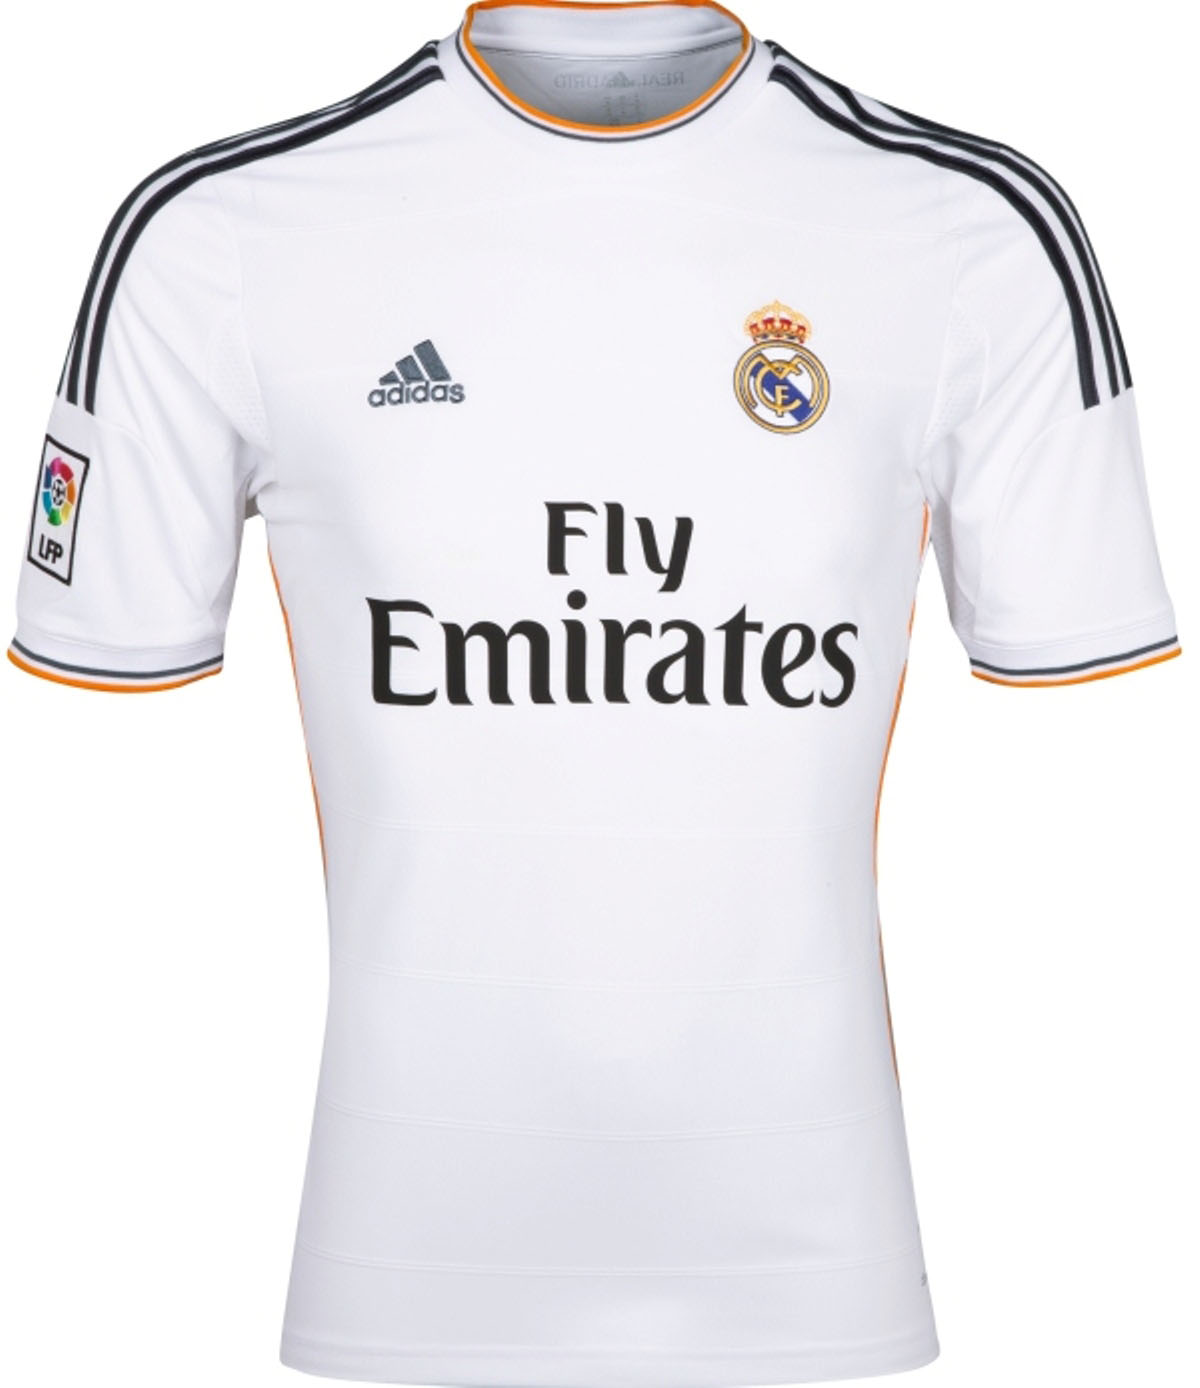 Real Madrid jersey shirt 2014